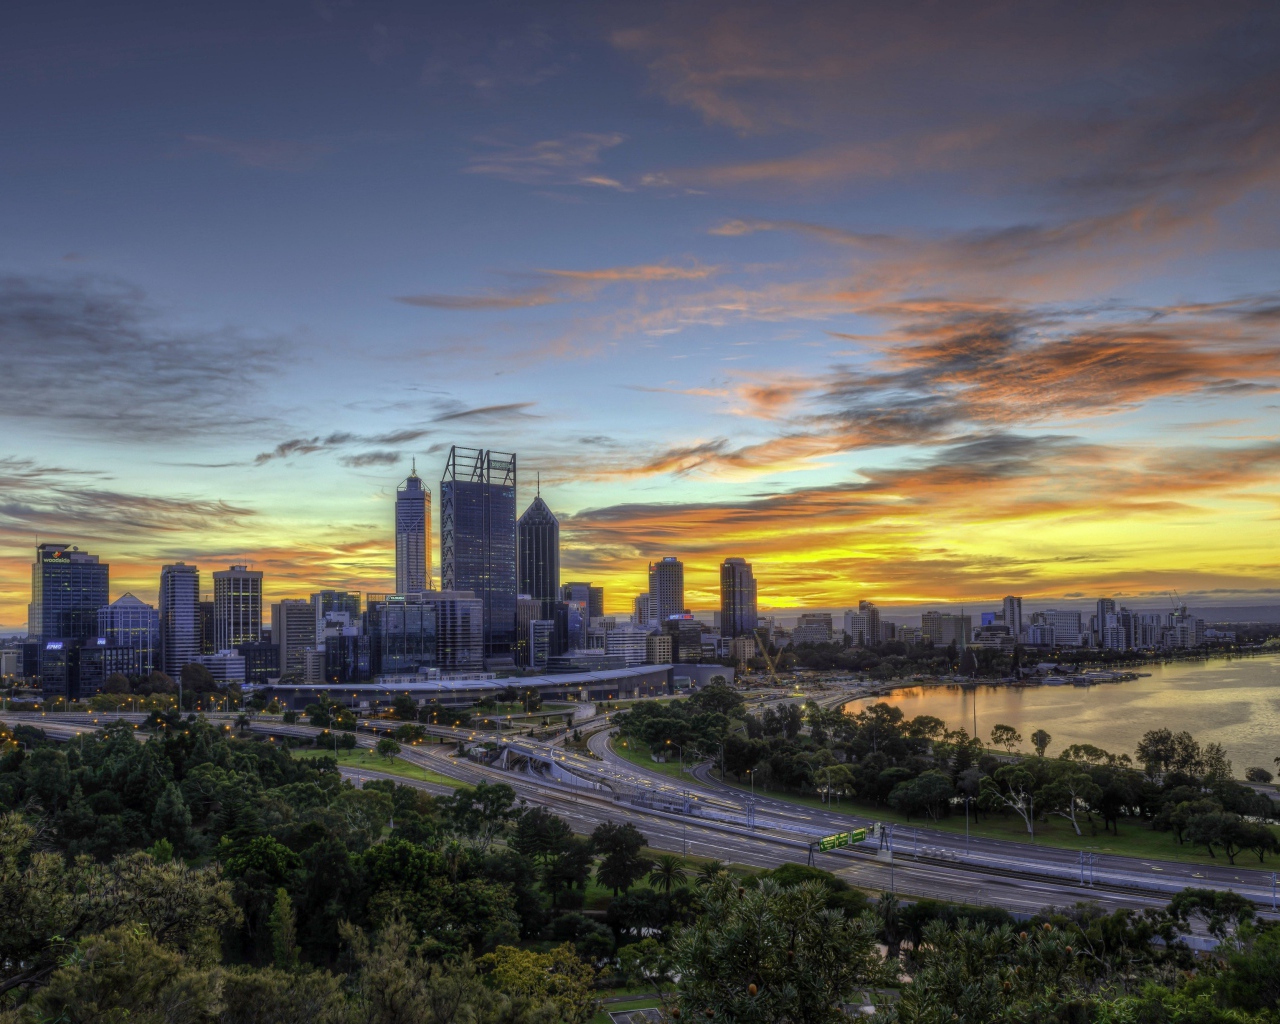 City of Perth in Australia